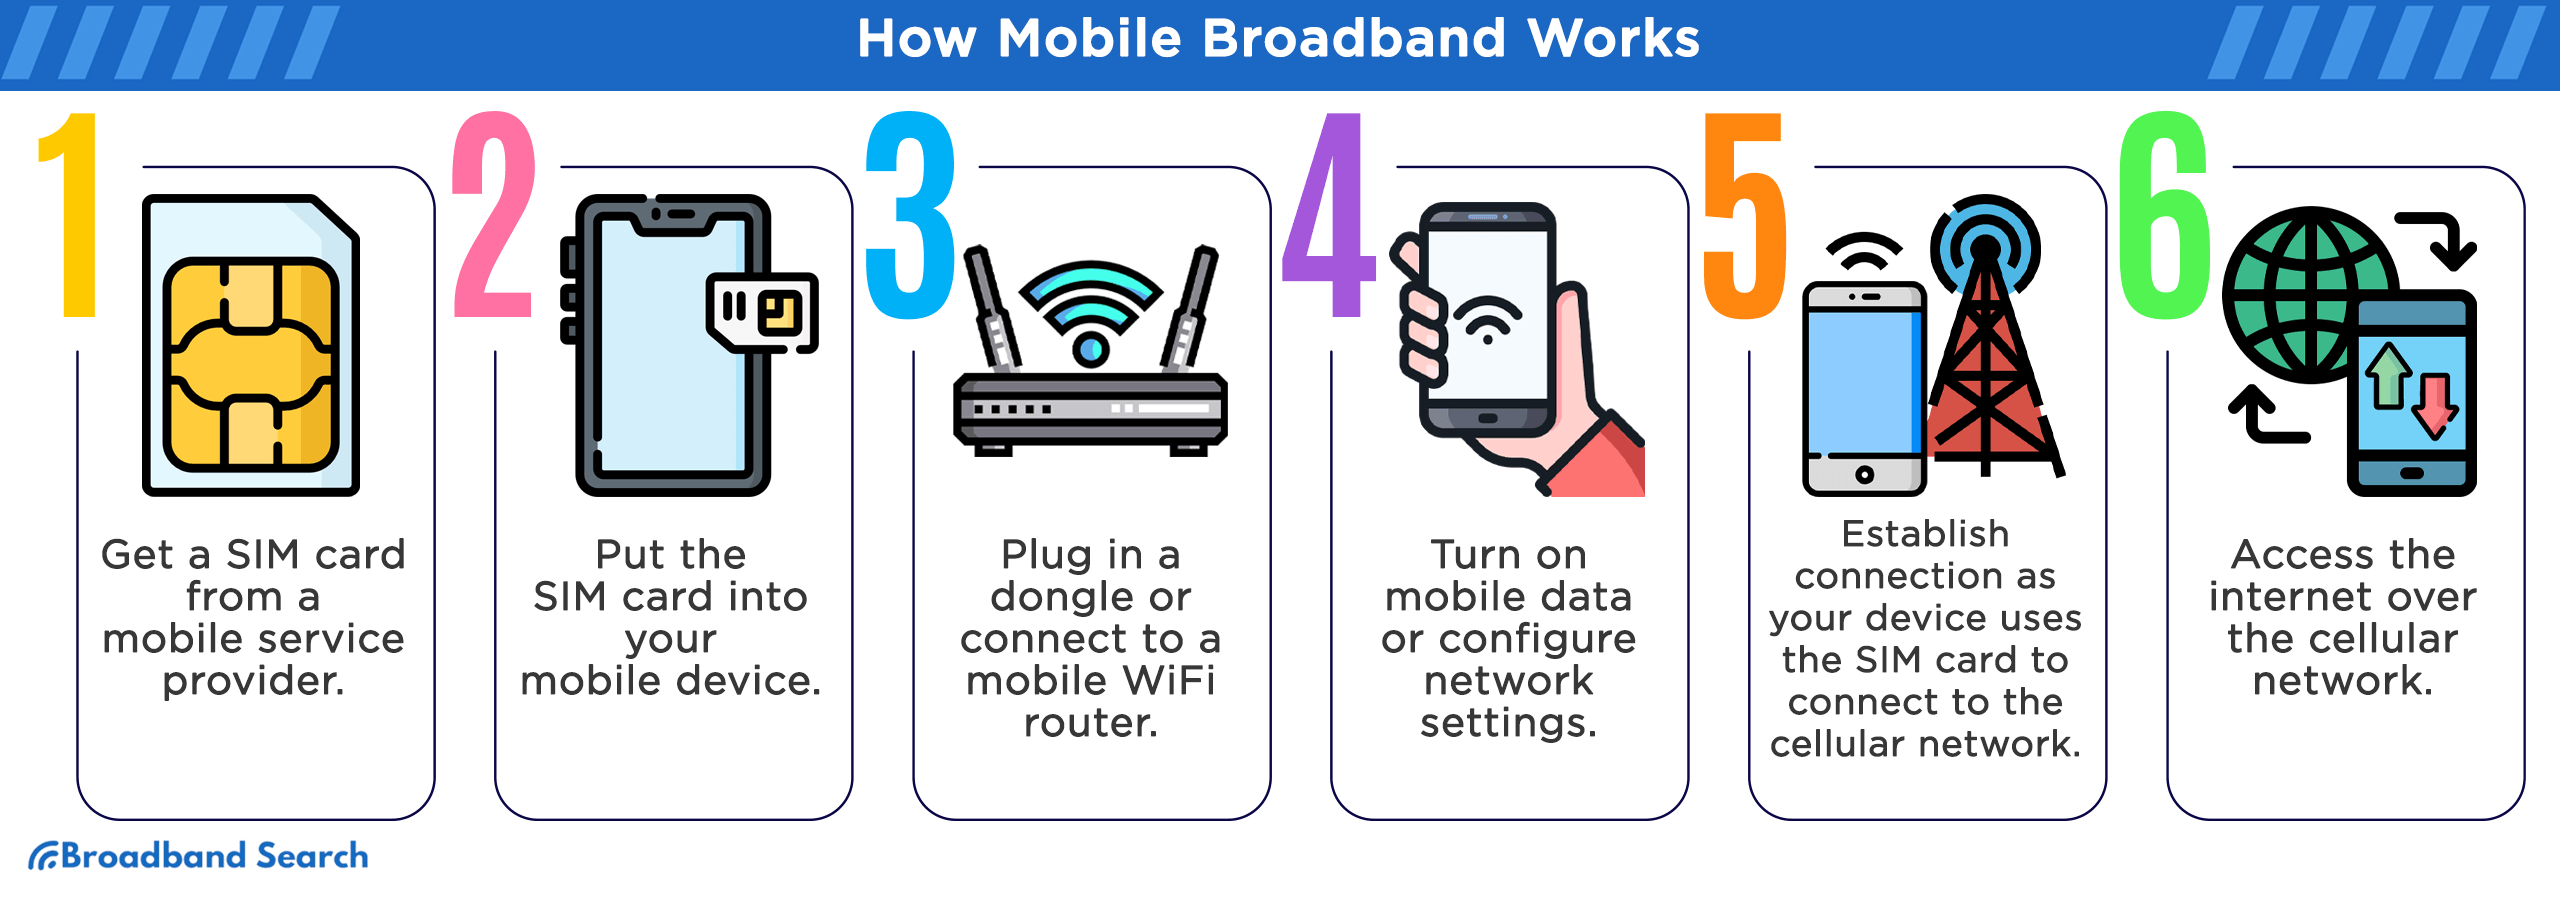 How Mobile Broadband Works